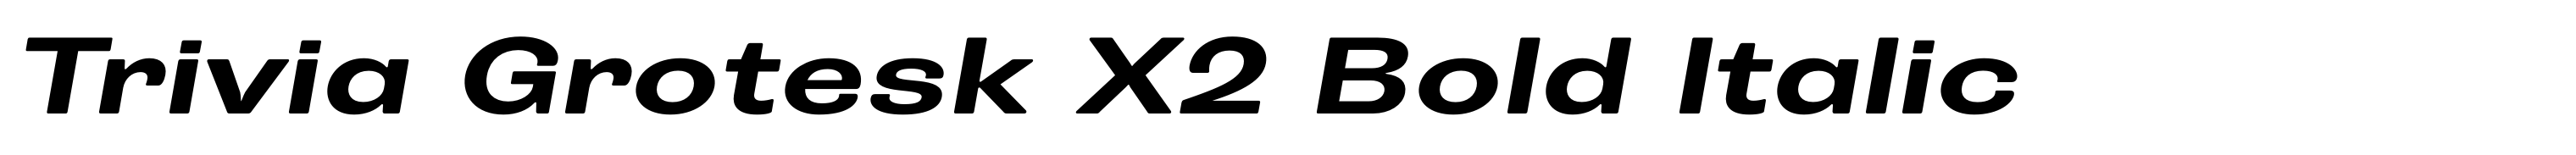 Trivia Grotesk X2 Bold Italic